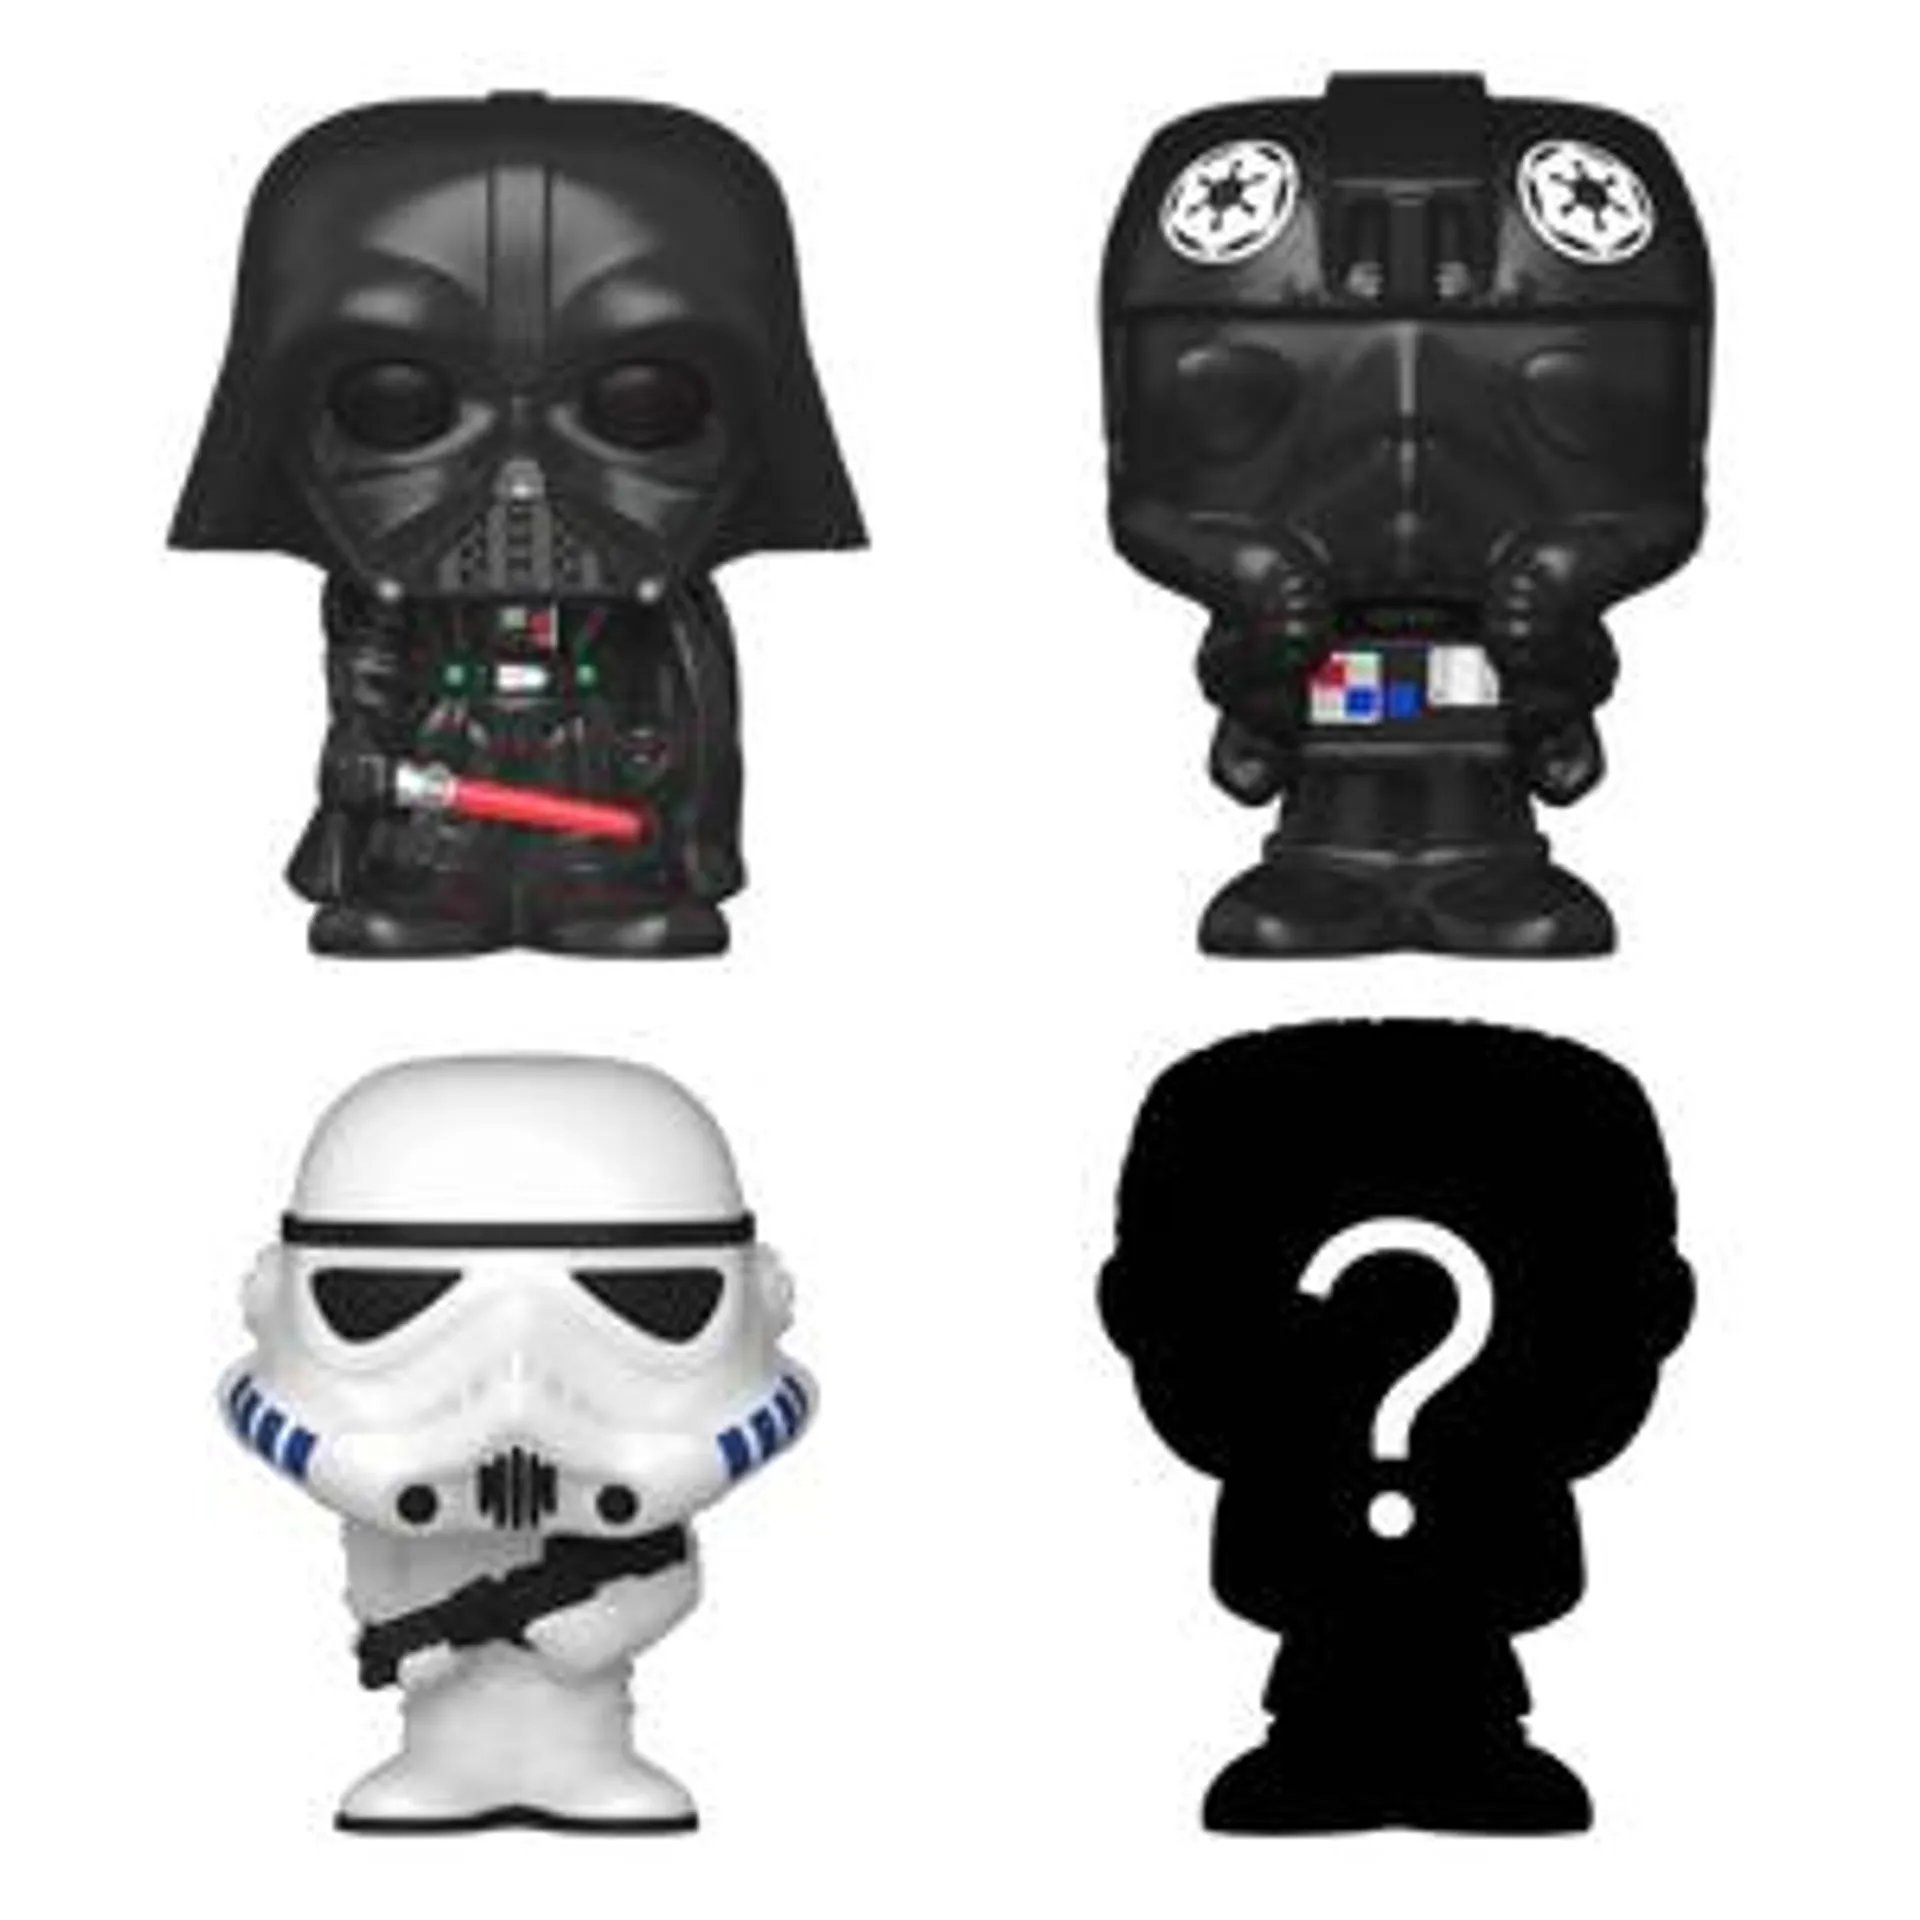 Star Wars: Bitty Pop! Vinyl Figure 4-Pack: TIE Fighter Pilot, Stormtrooper, Darth Vader & Mystery Figure